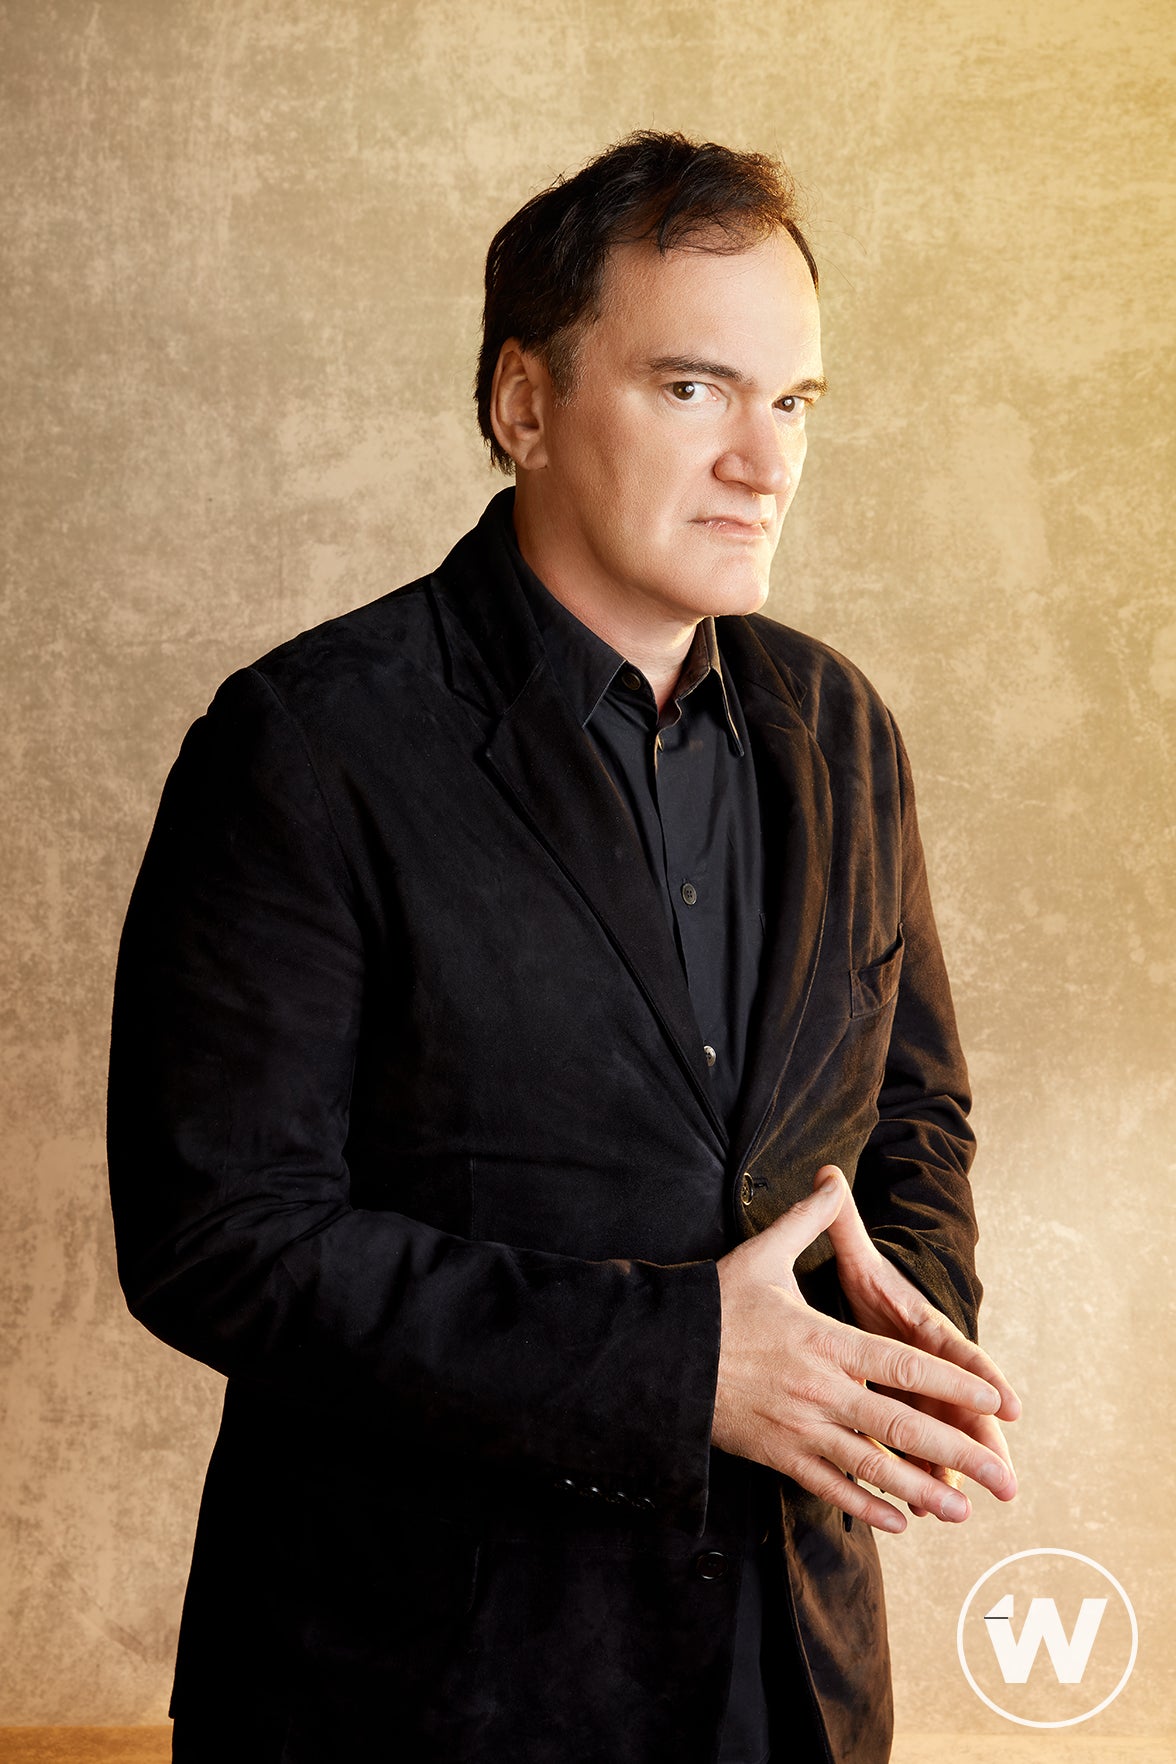 https://www.thewrap.com/wp-content/uploads/2020/01/Quentin-Tarantino.jpg